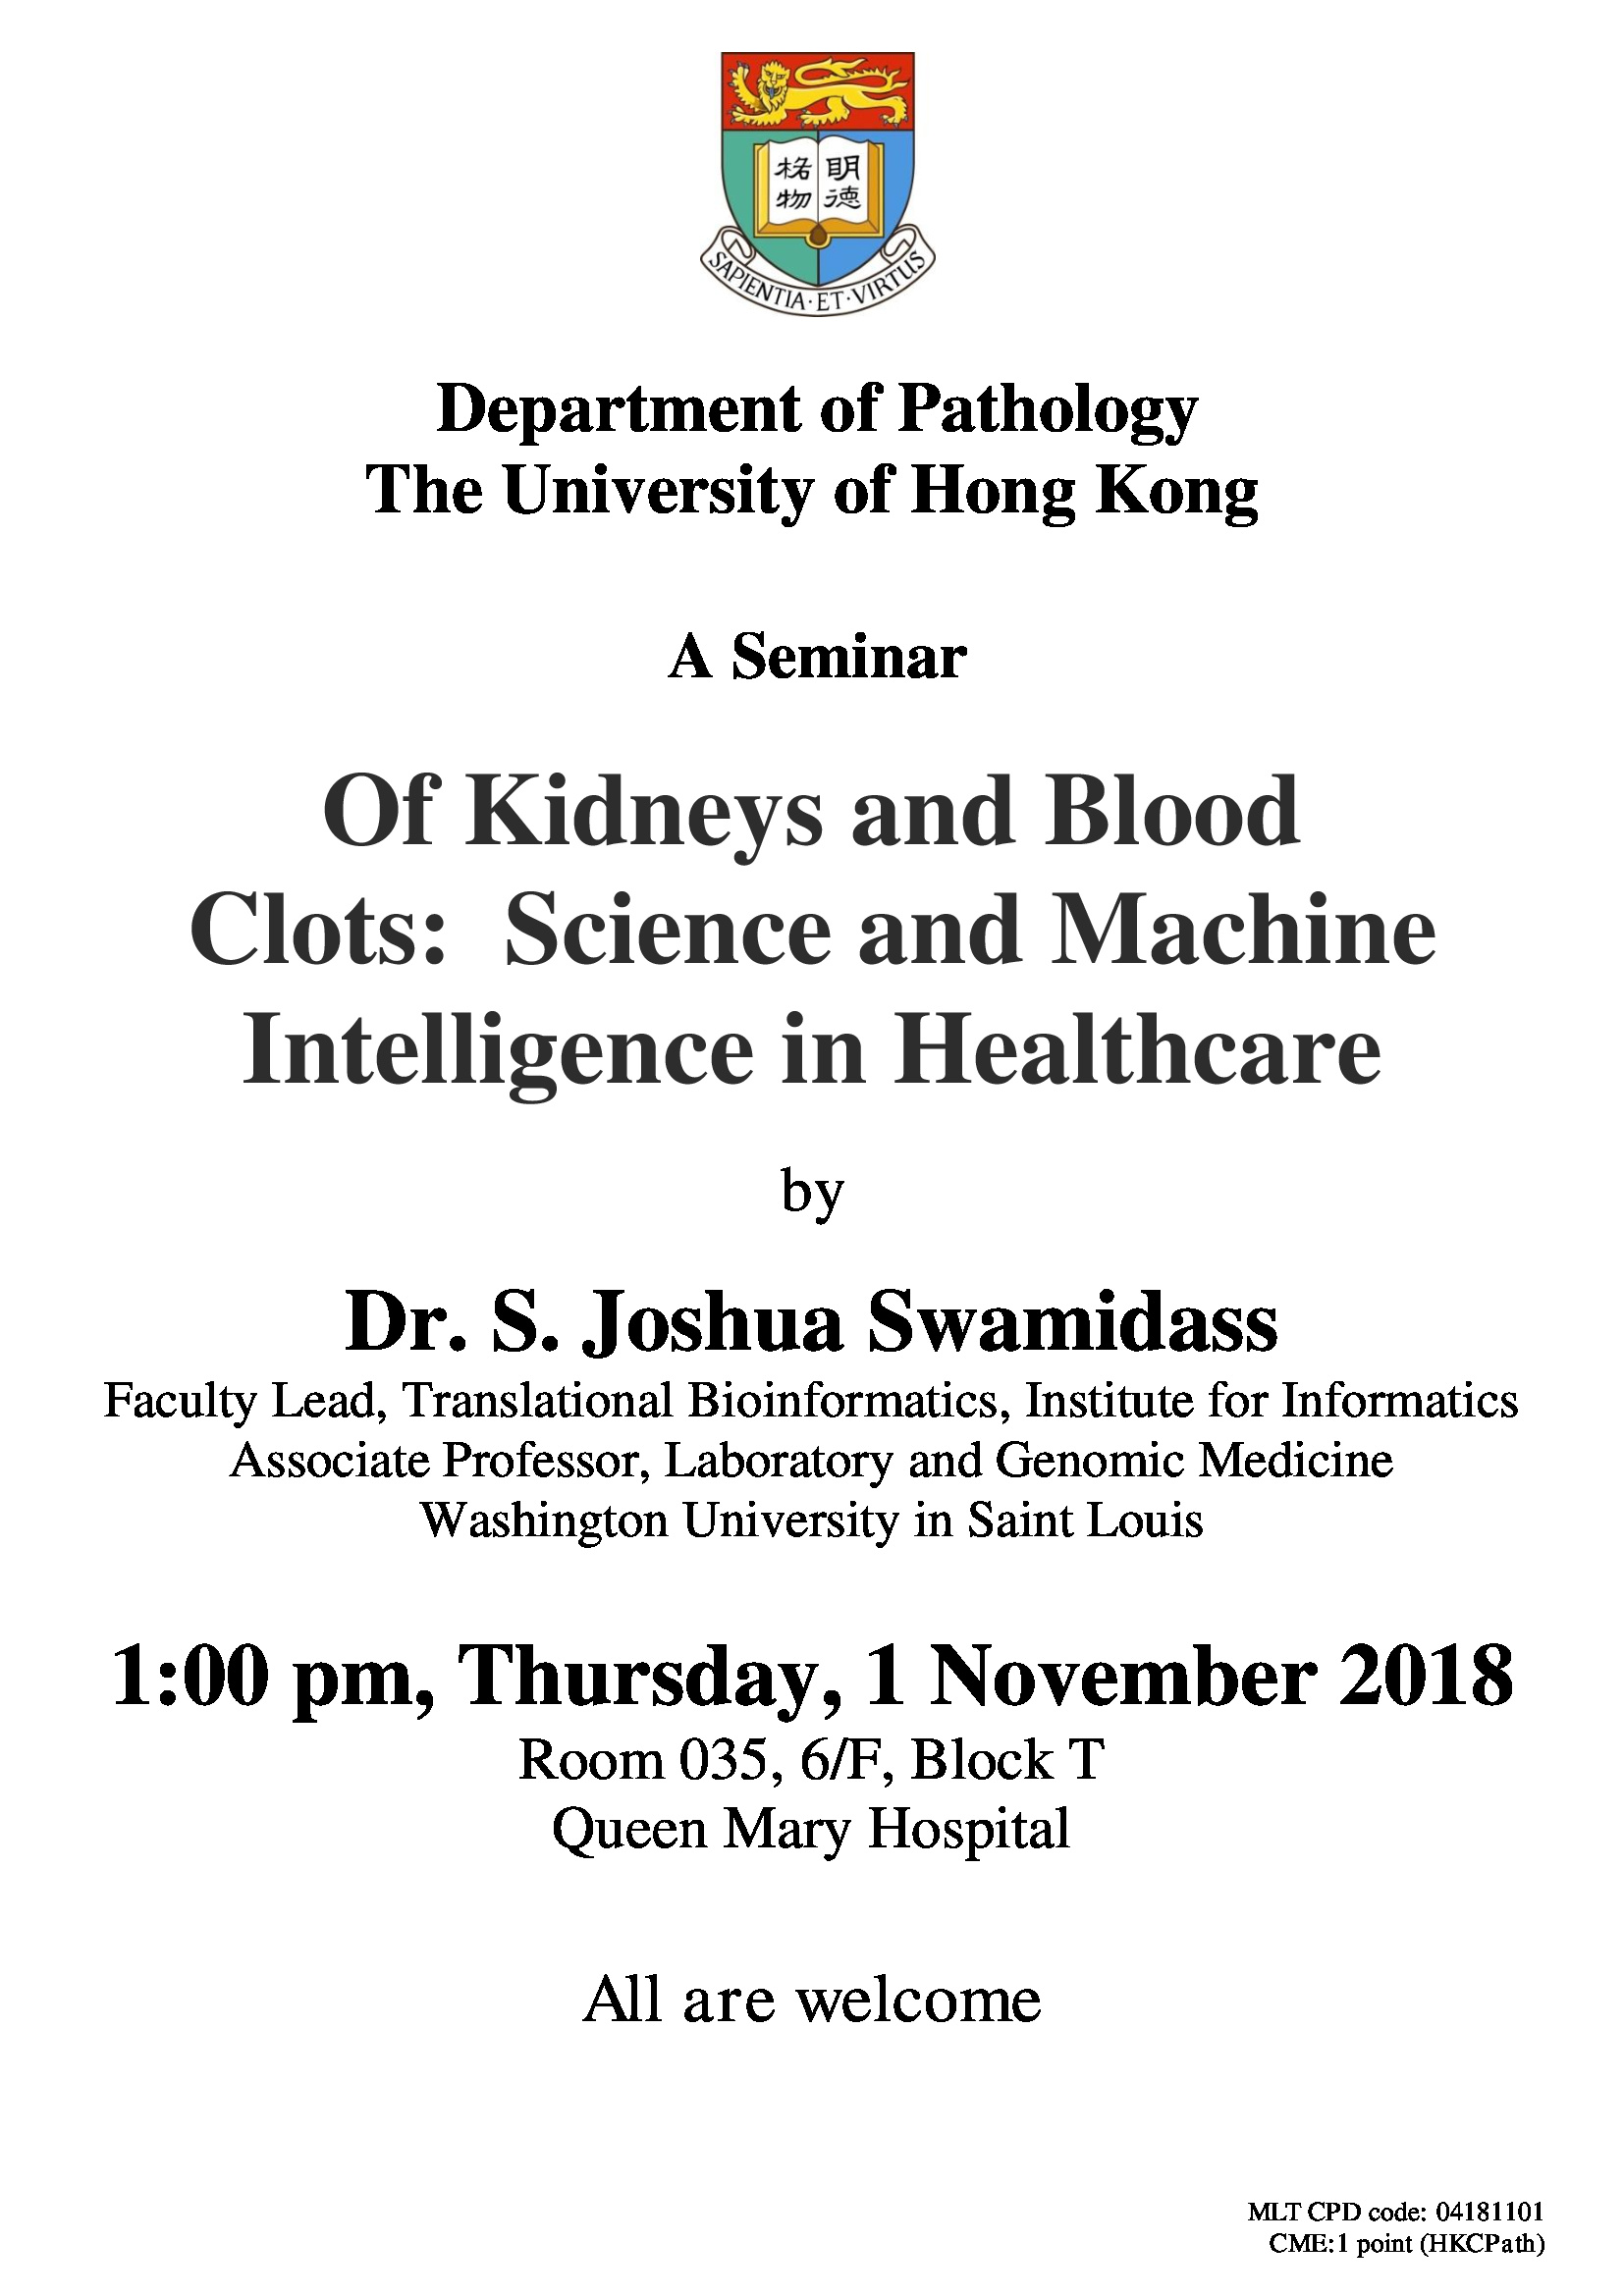 A Seminar by Dr. S. Joshua Swamidass on 1 Nov (1 pm)